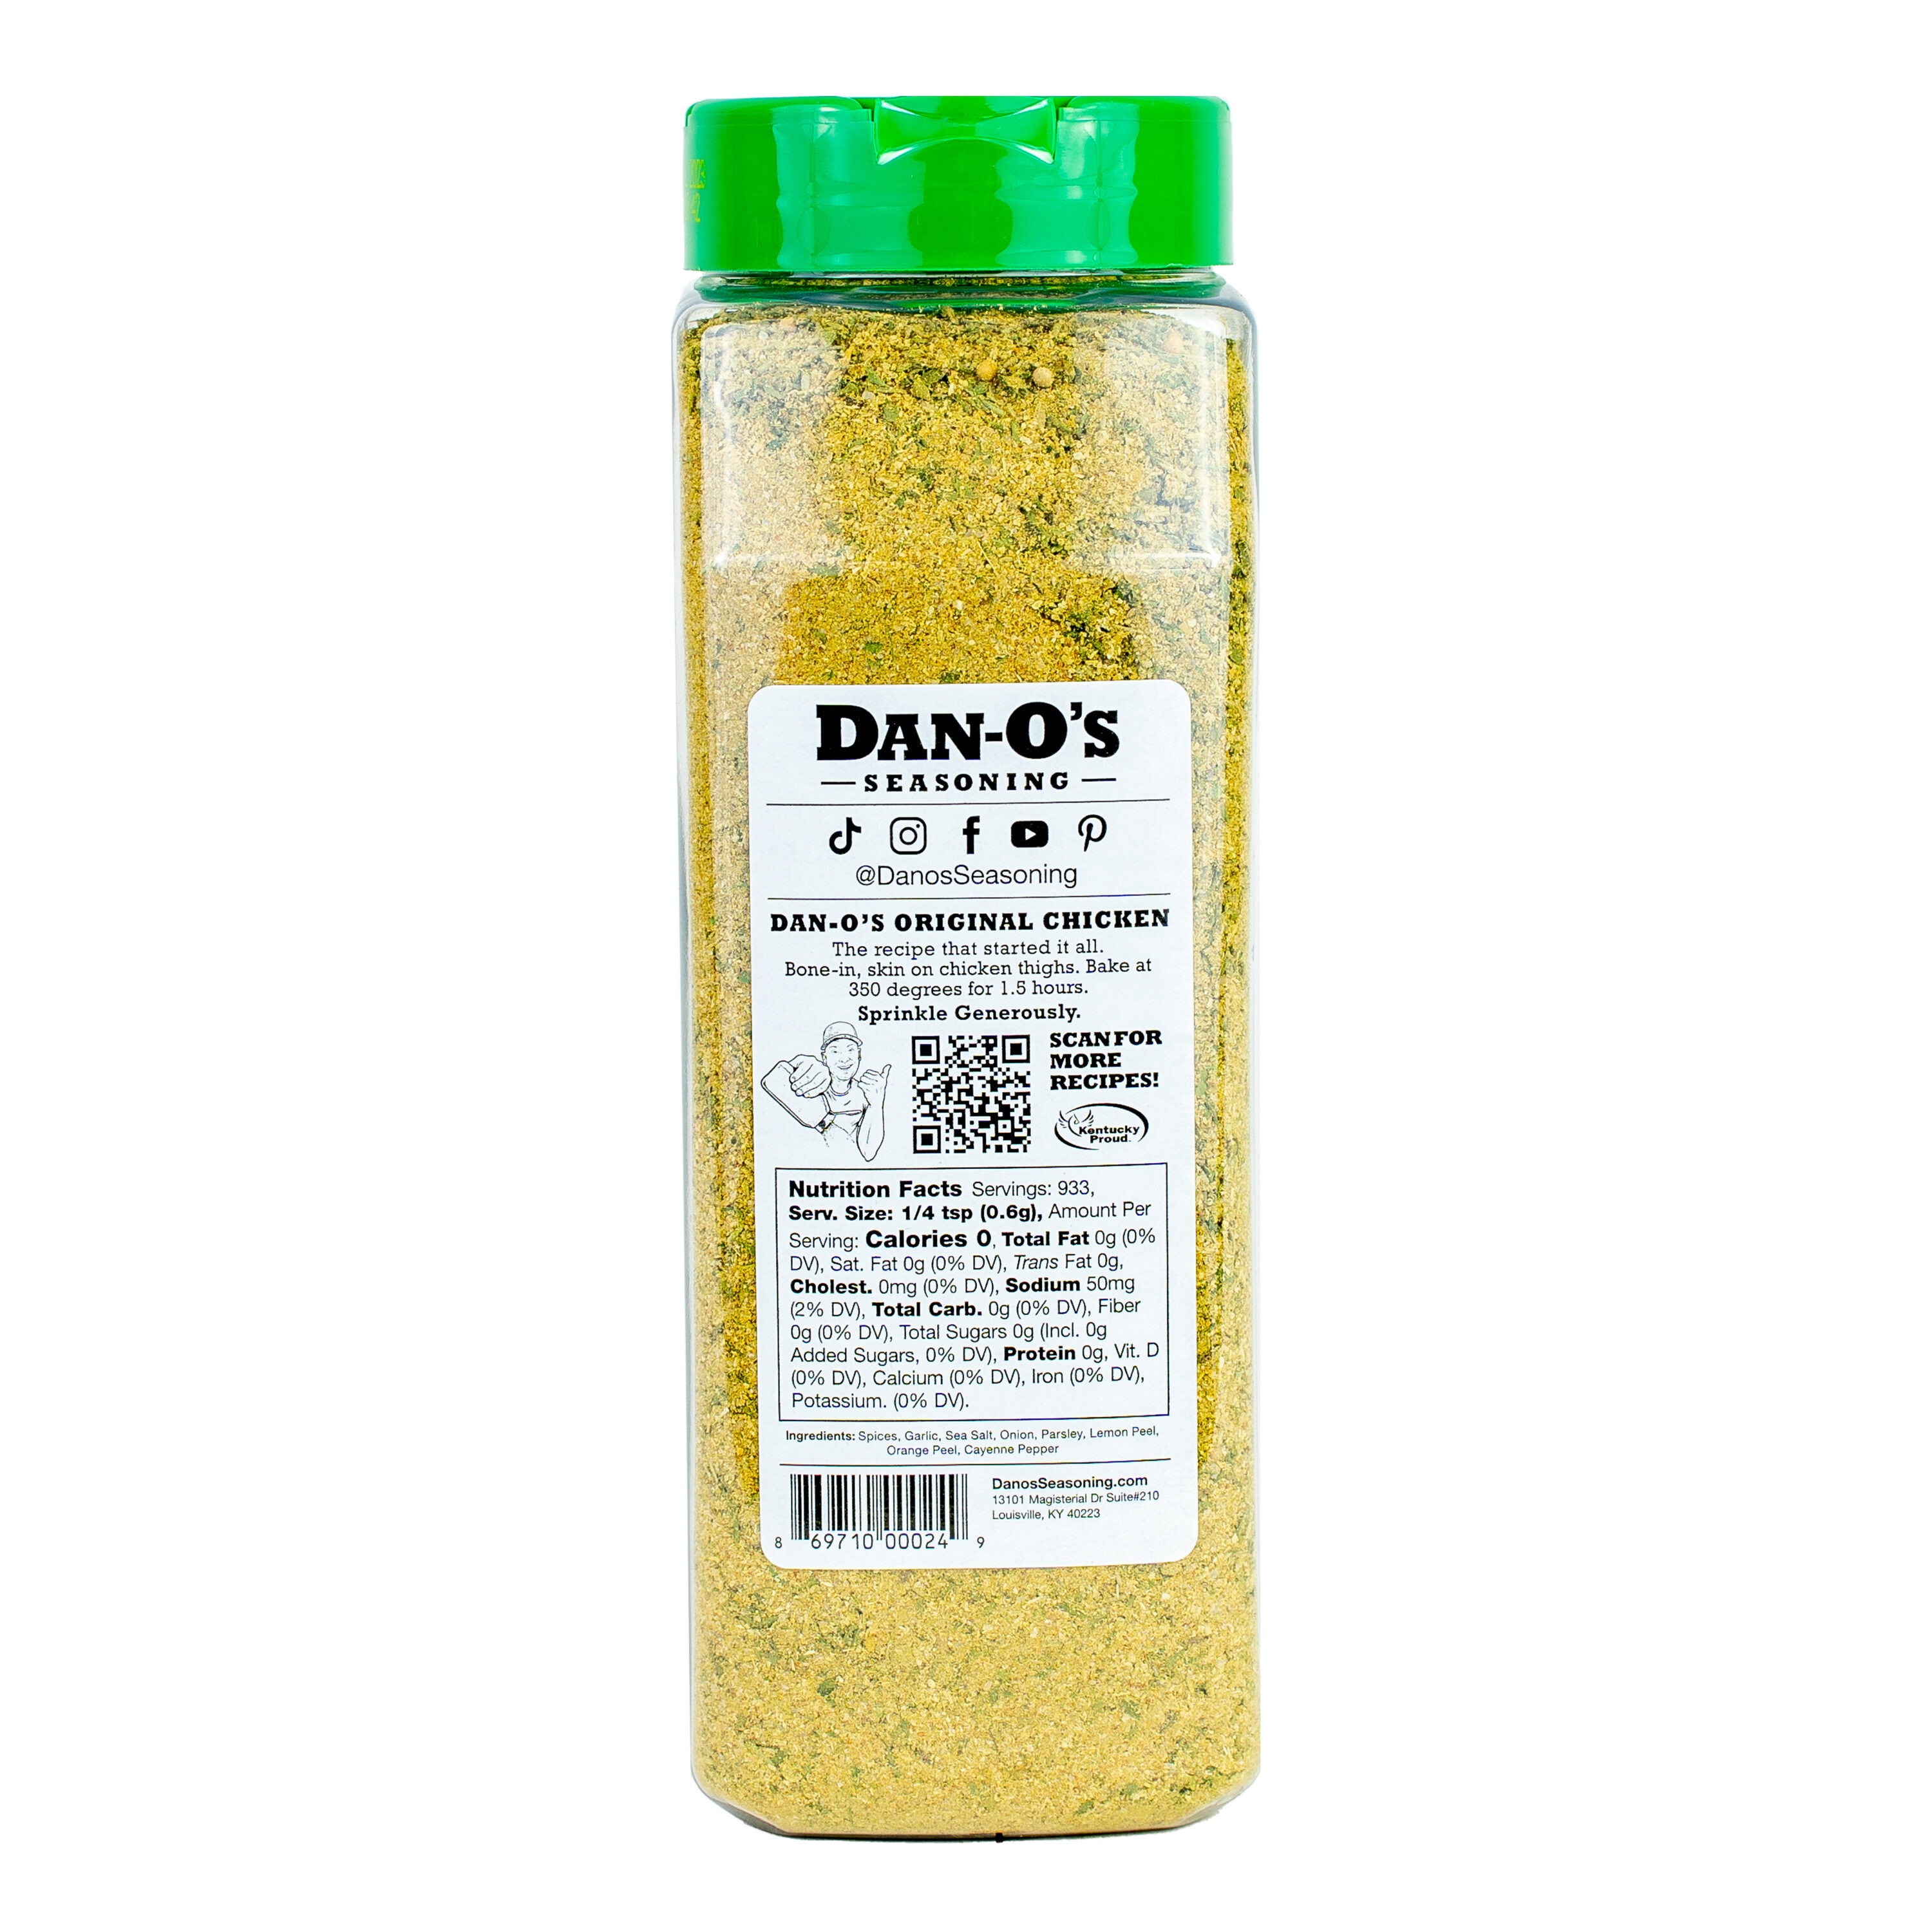 Dan-O's Original Seasoning Green Top Low Sodium No Sugar or MSG danos (3.5  oz)